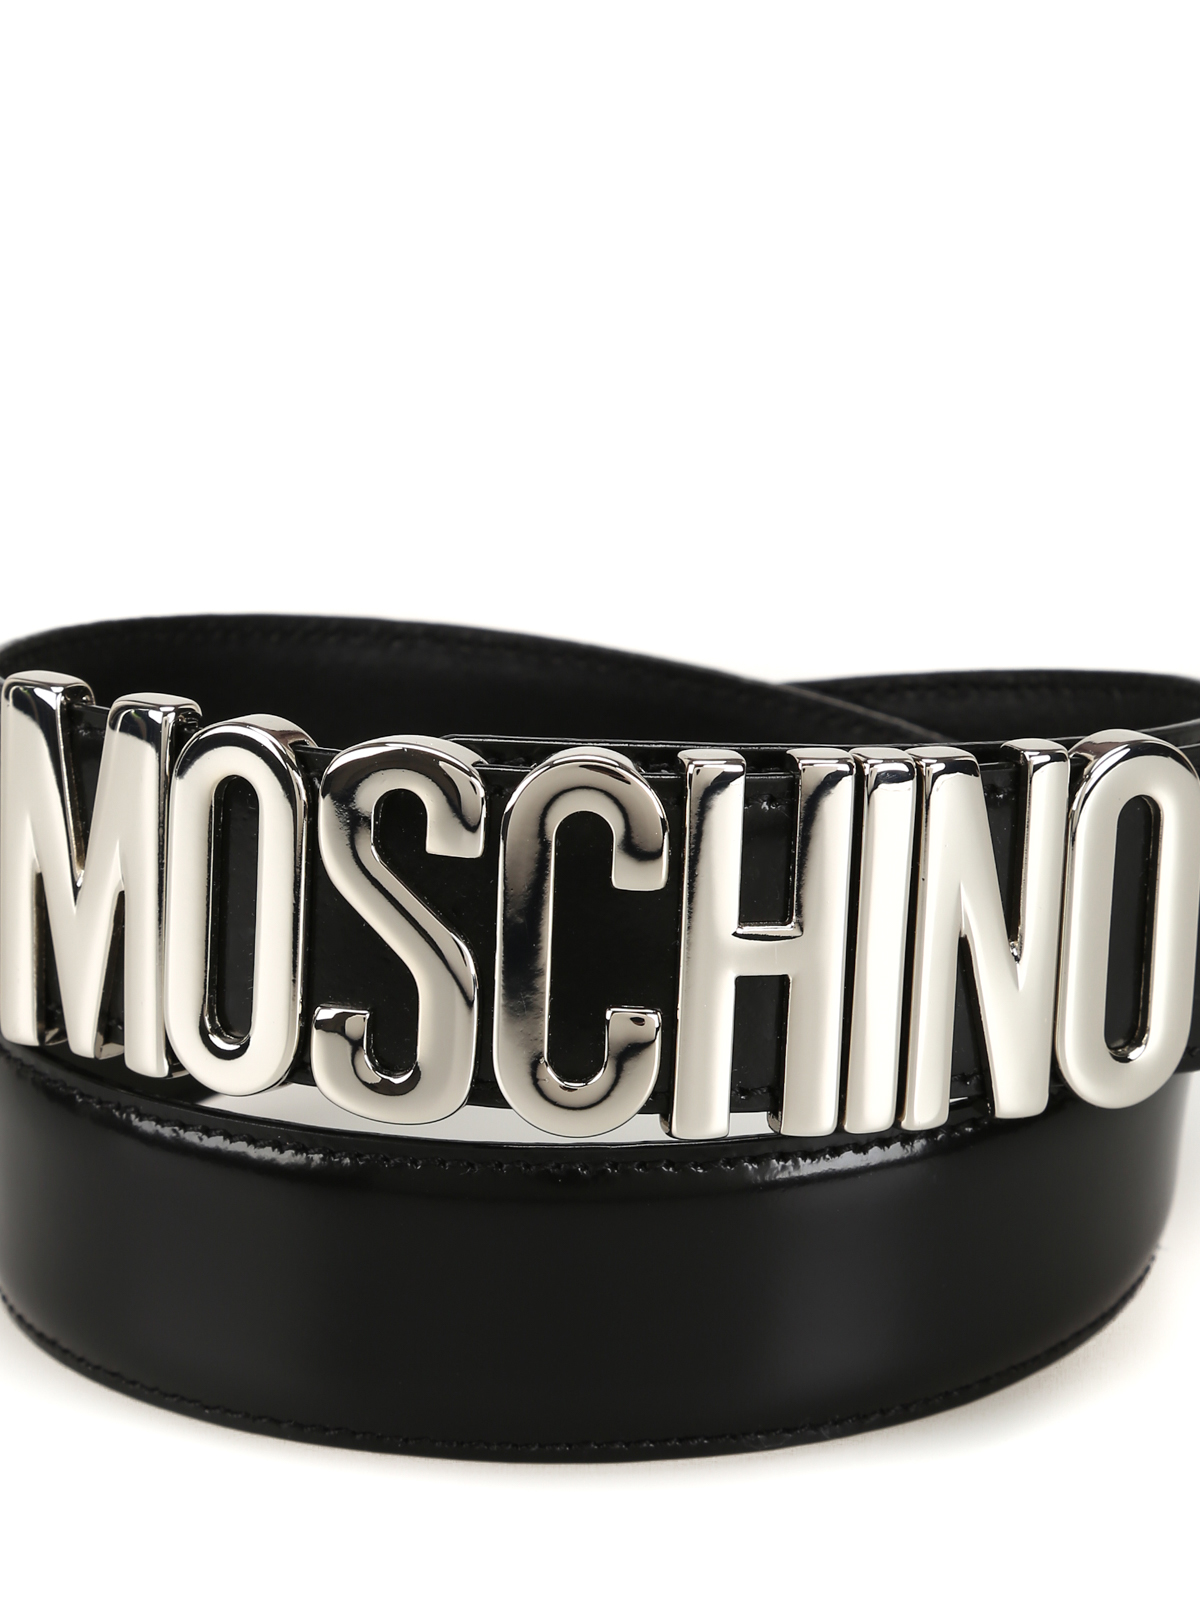 Belts Moschino - Logo lettering black patent leather belt - 801280071555